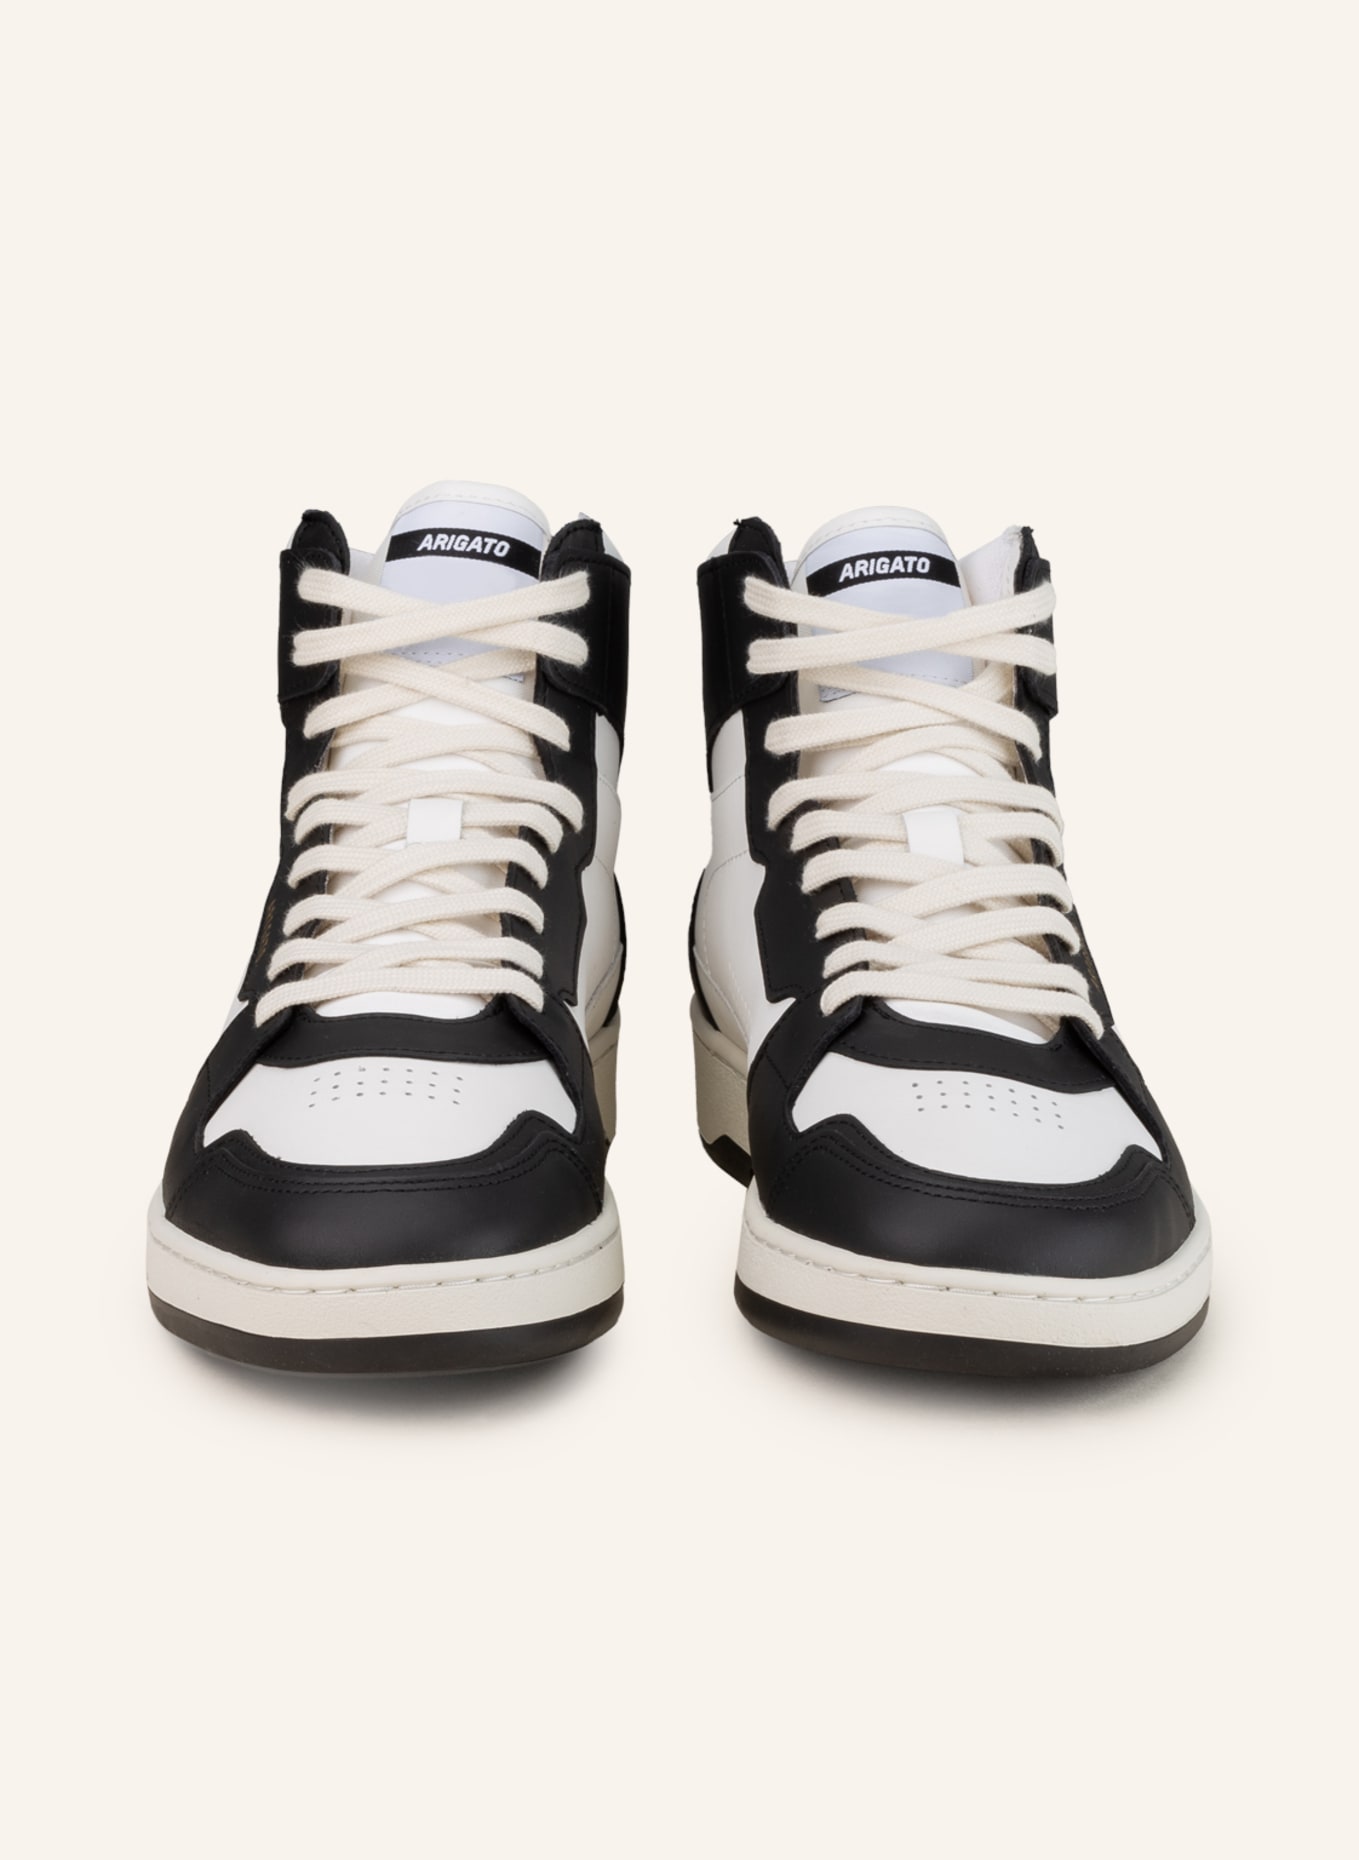 AXEL ARIGATO Hightop-Sneaker DICE, Farbe: WEISS/ SCHWARZ (Bild 3)